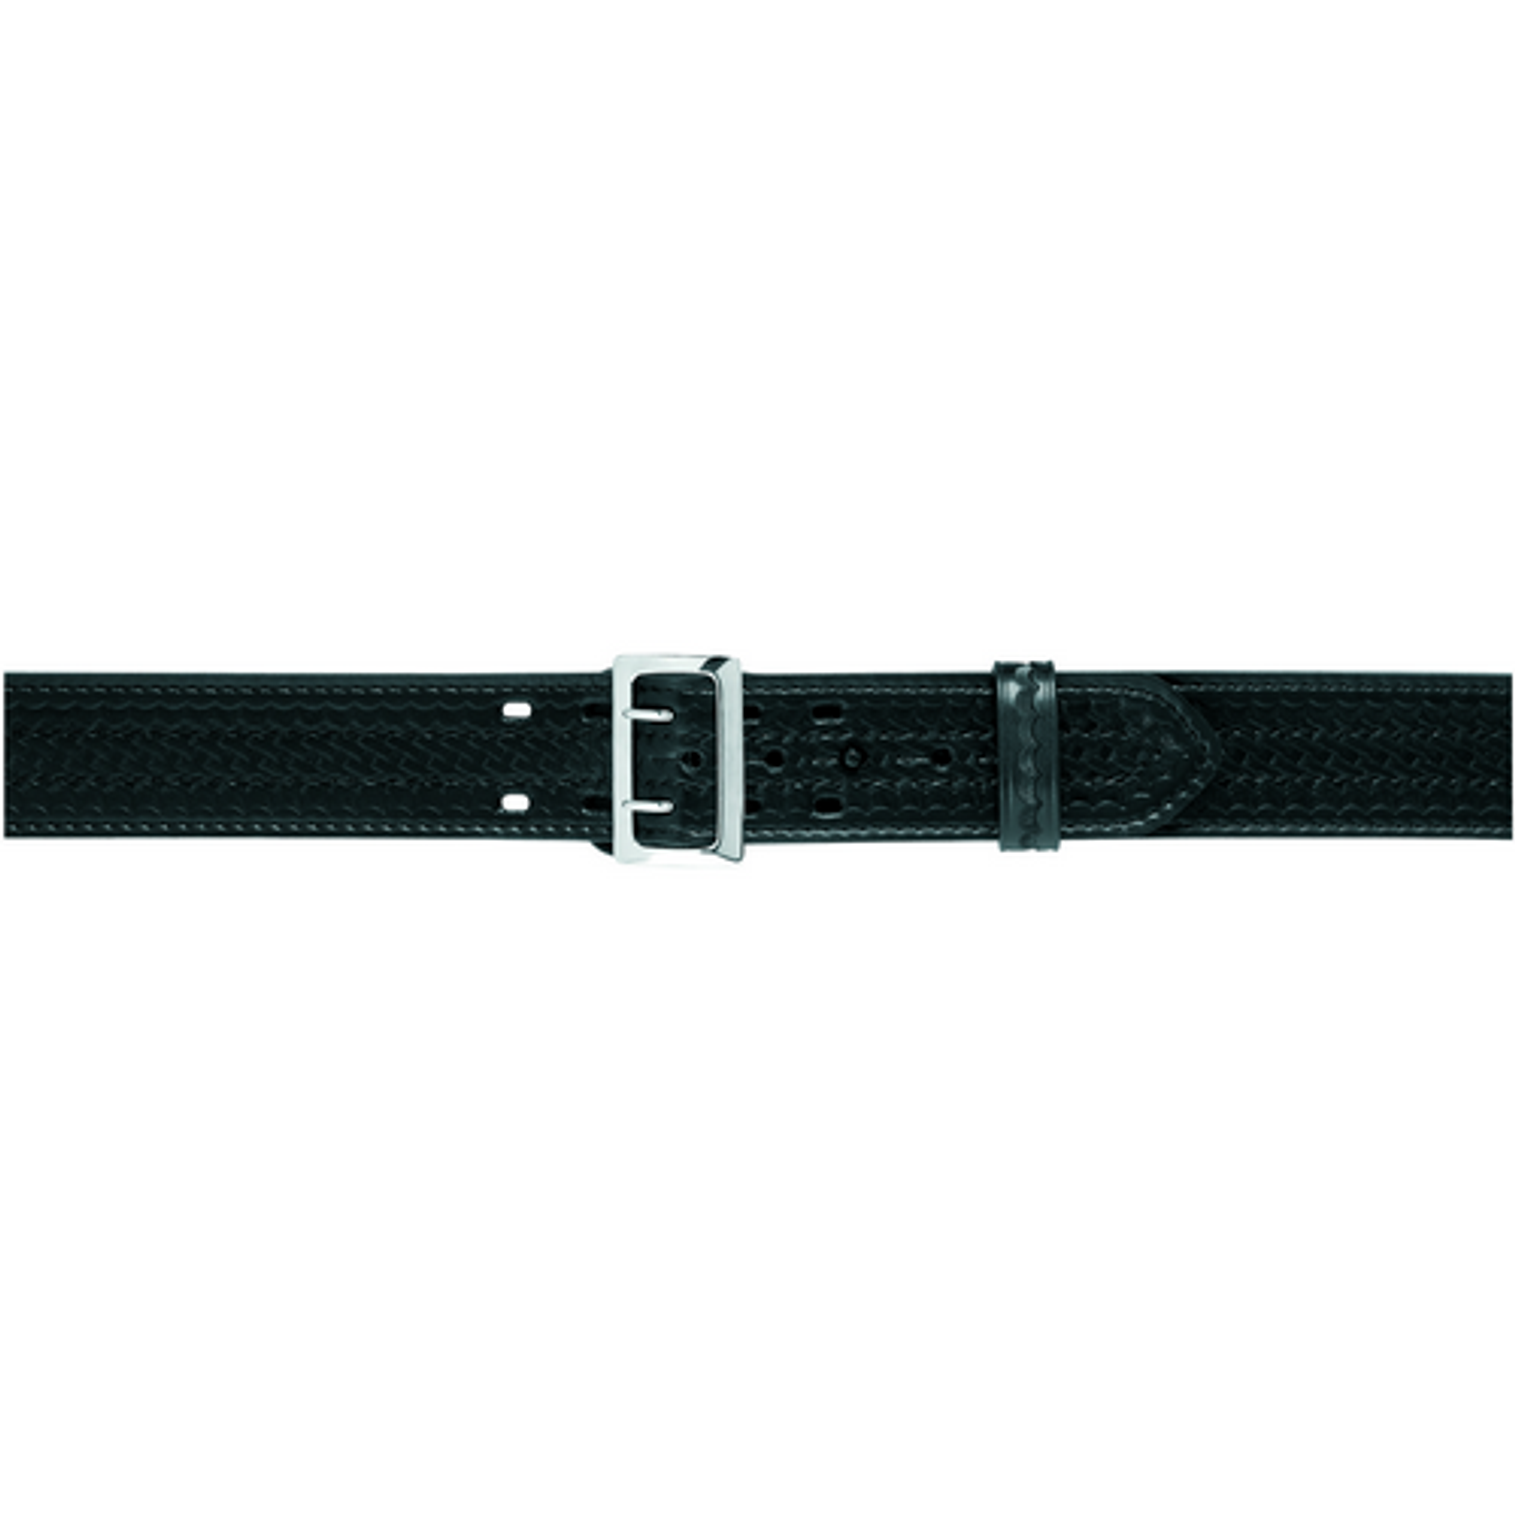 875 - Stitched Edge Sam Browne Duty Belt 2.25 (58mm) - KR875-42-8